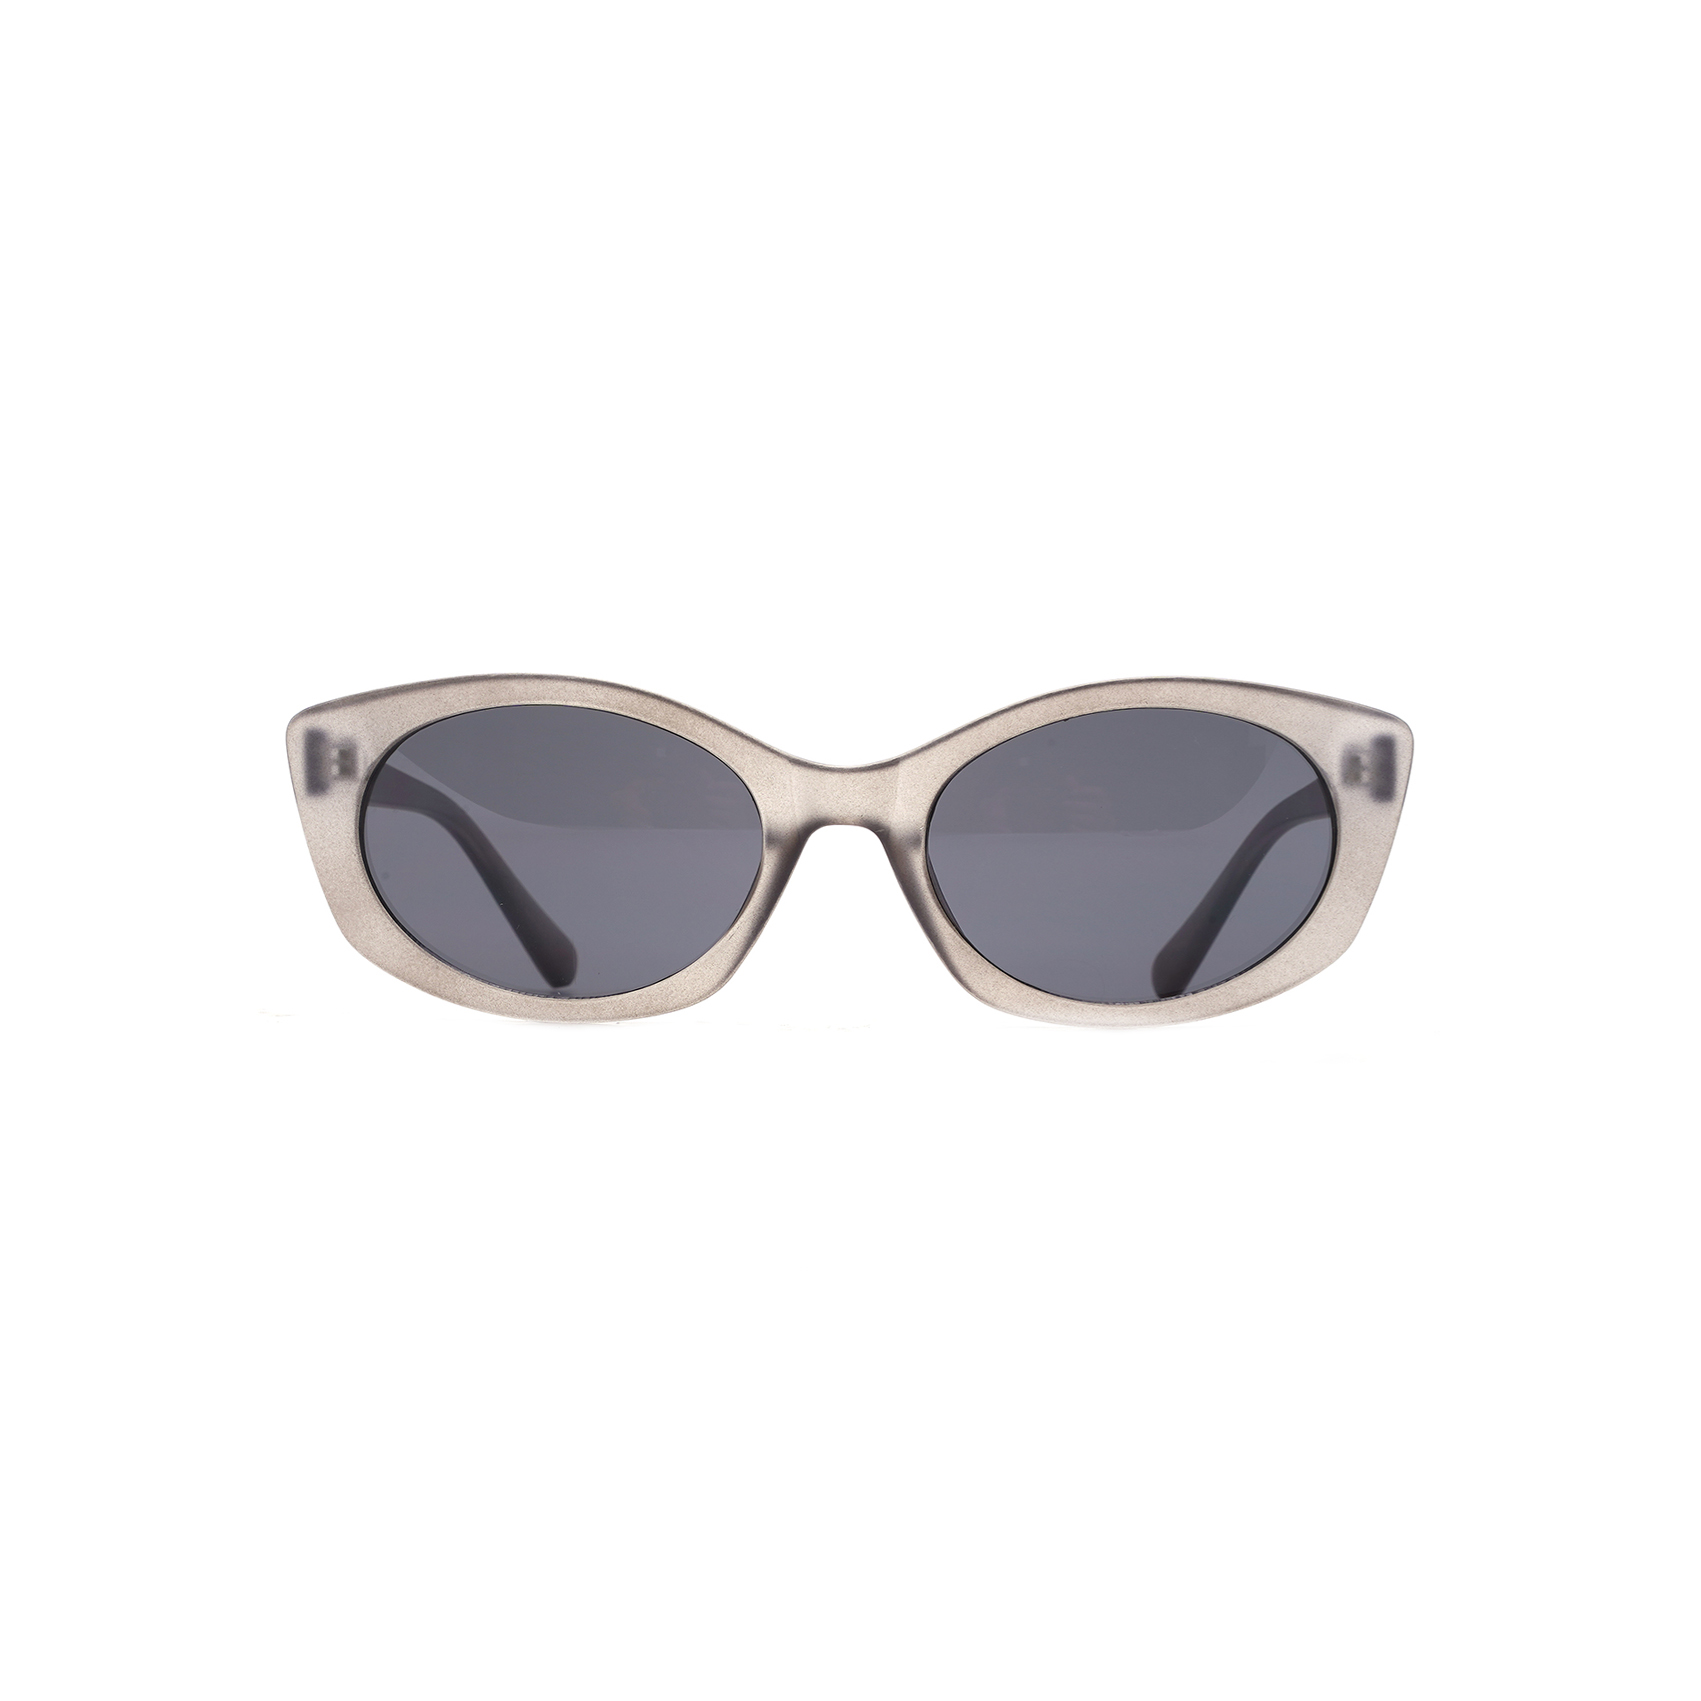 Women's Cat Eye Oval Sunglasses Oval Sunglasses for Women